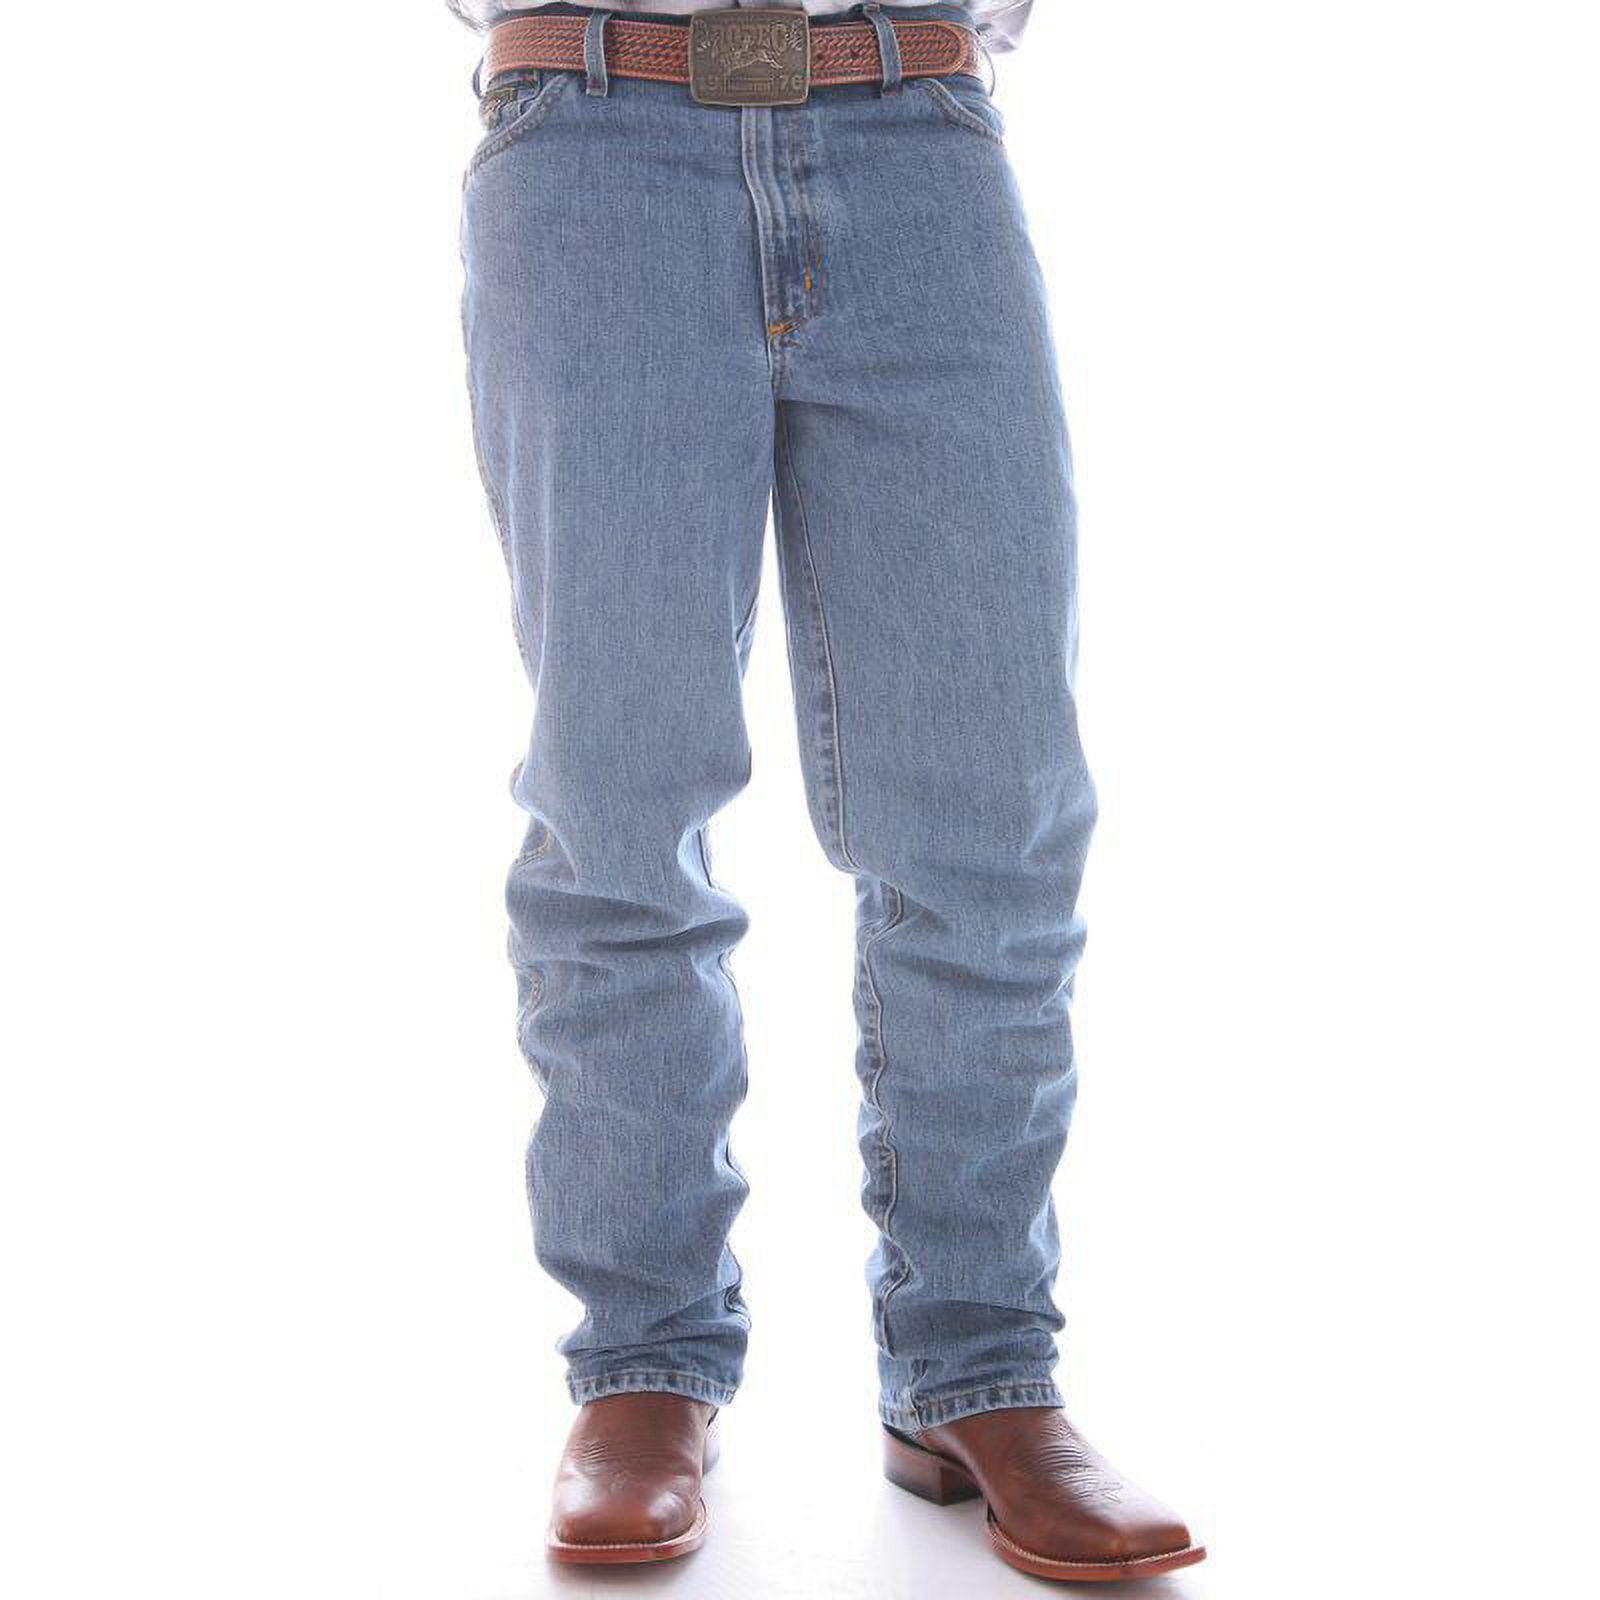 Cinch Men's Jeans  Original Fit Green Label Midstone 33W x 38L  US - image 2 of 4